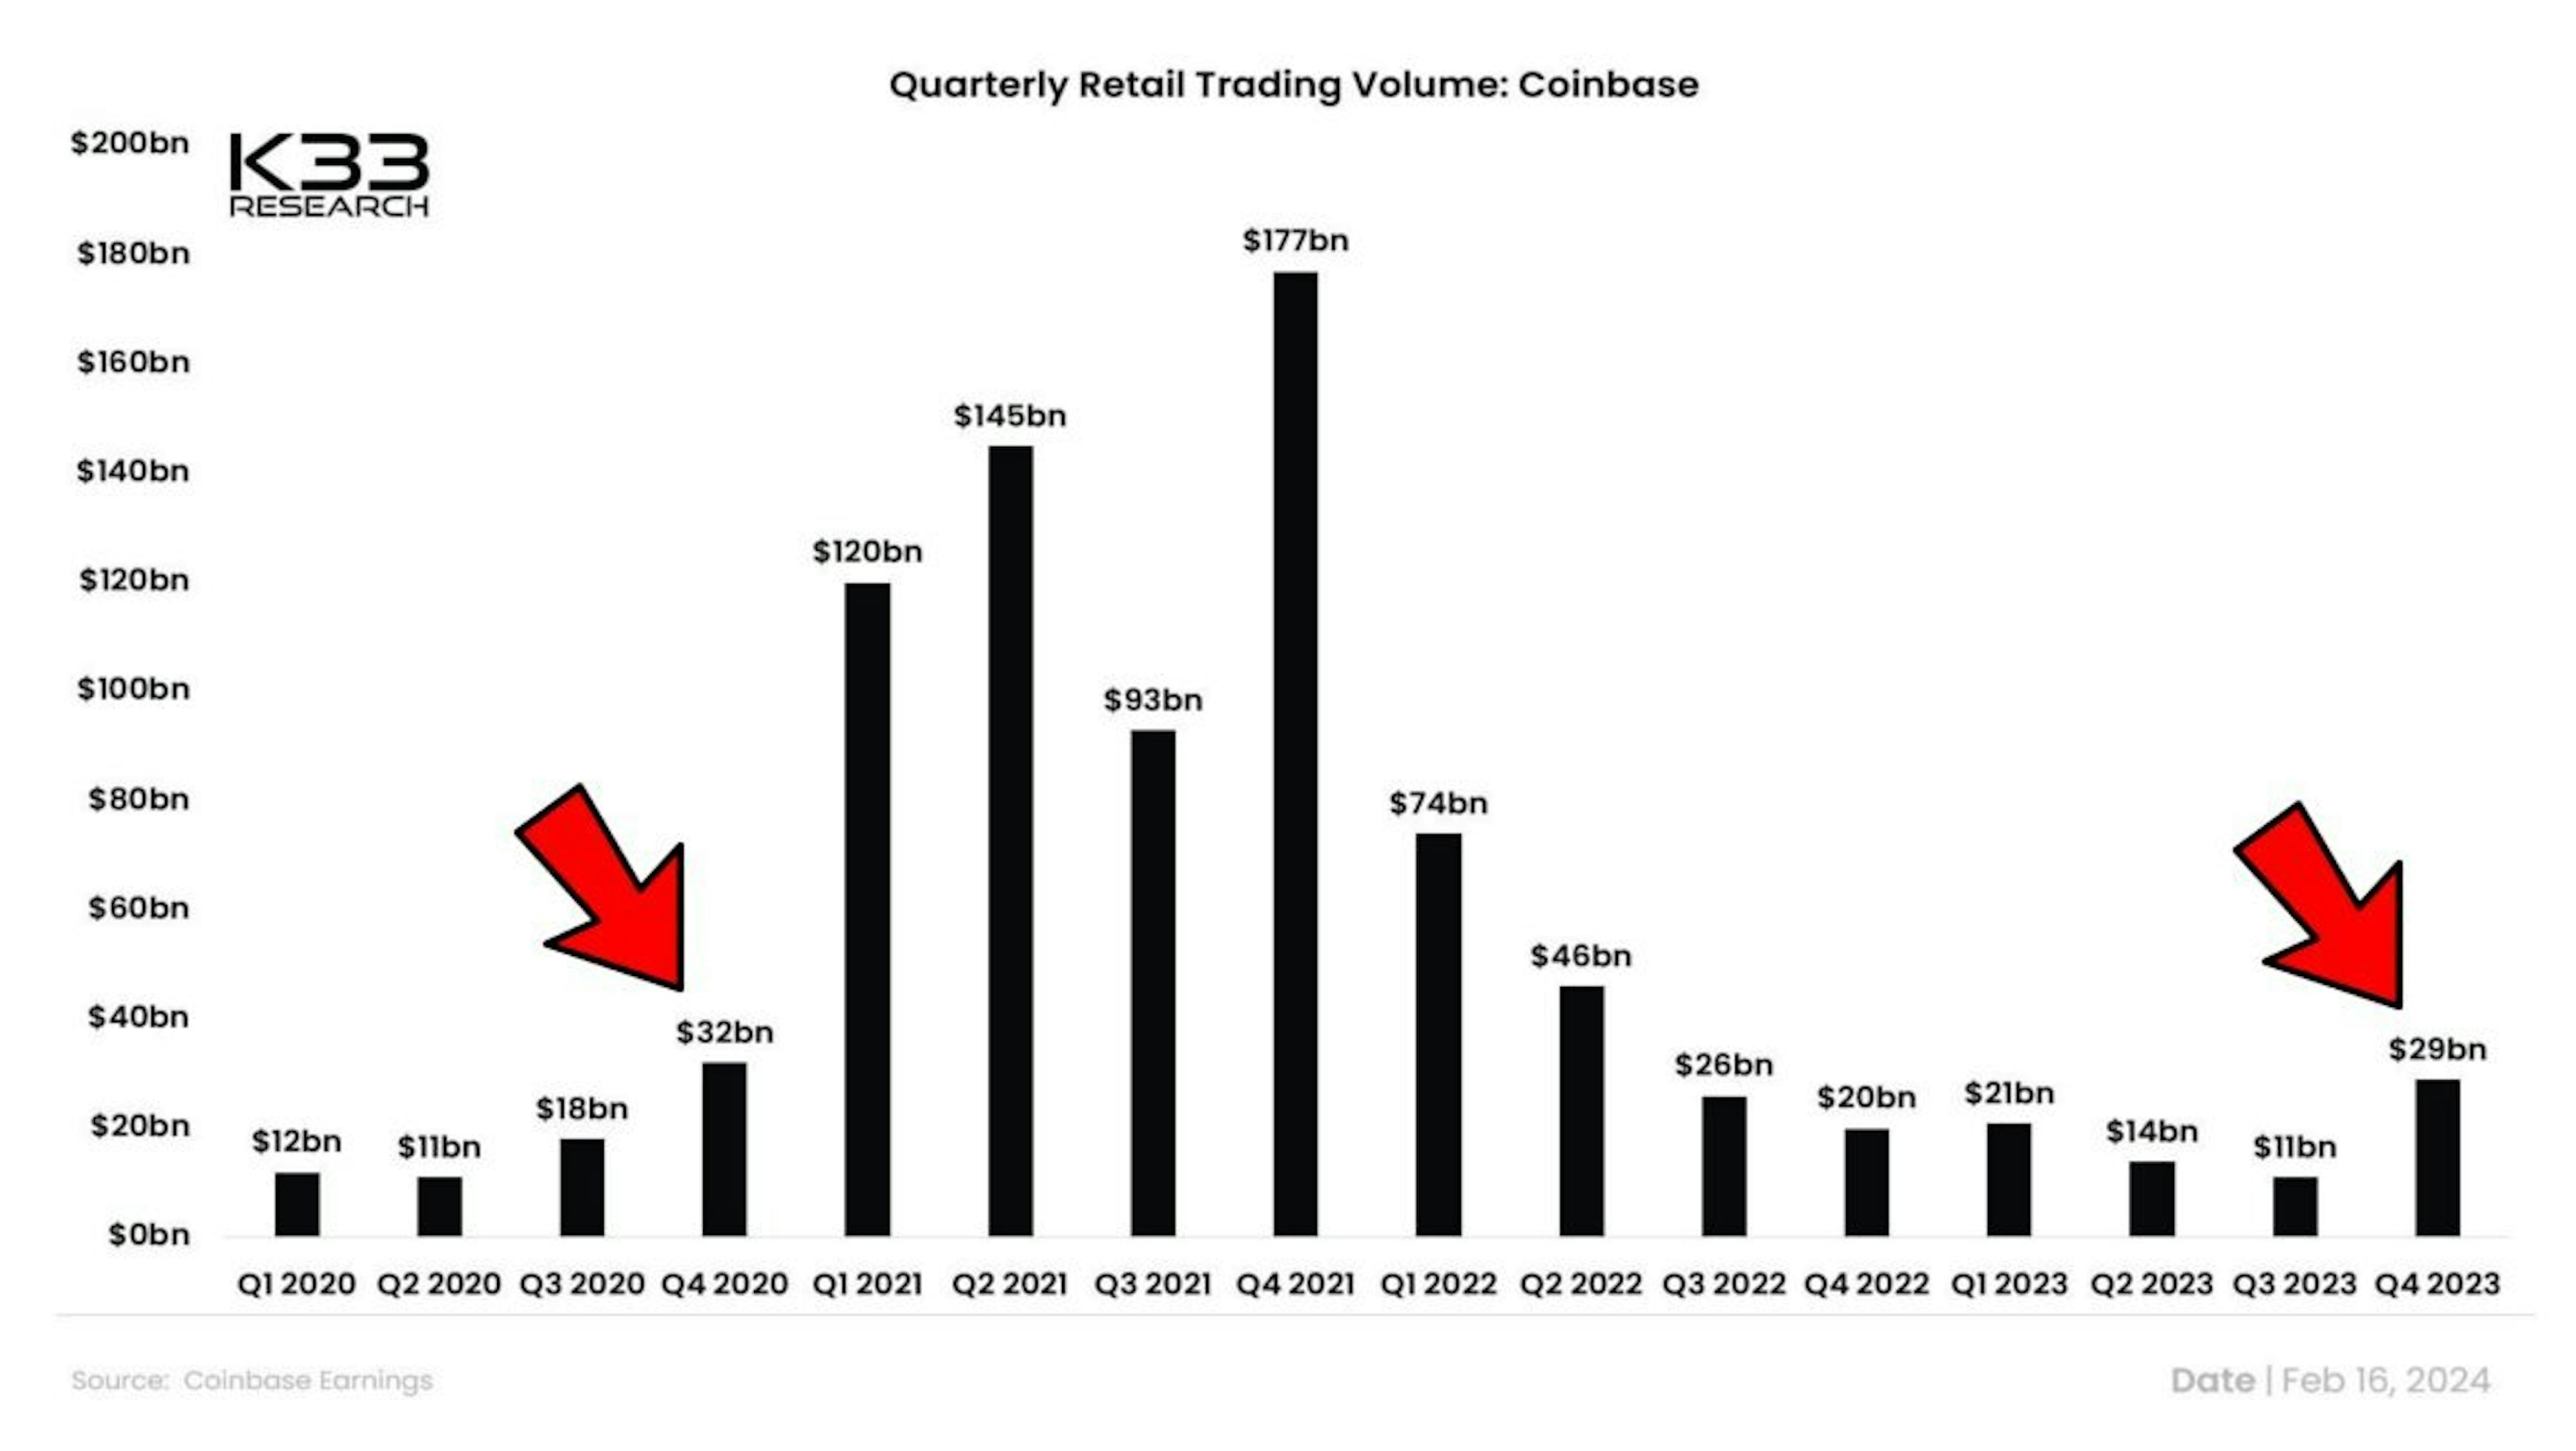 Quarterly retail trading volume